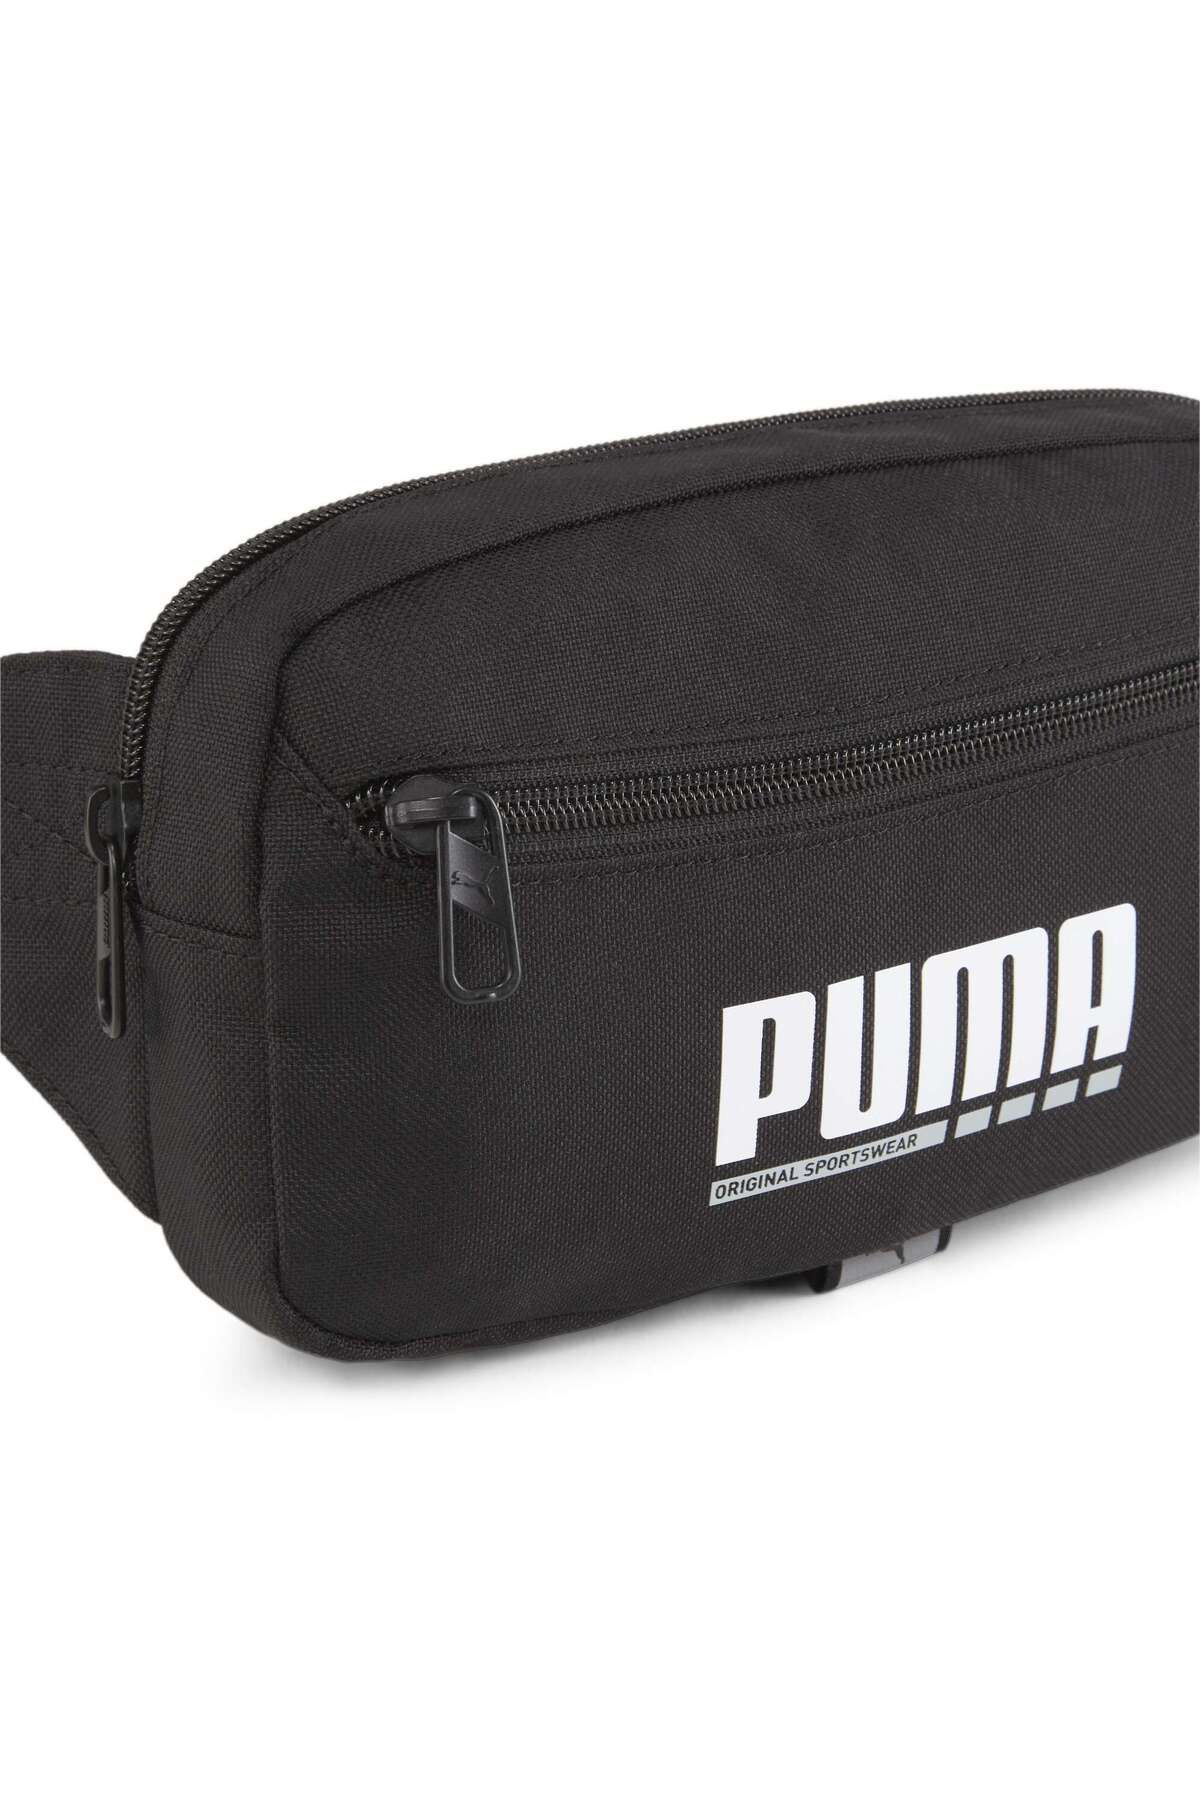 Puma به علاوه کیف کمر